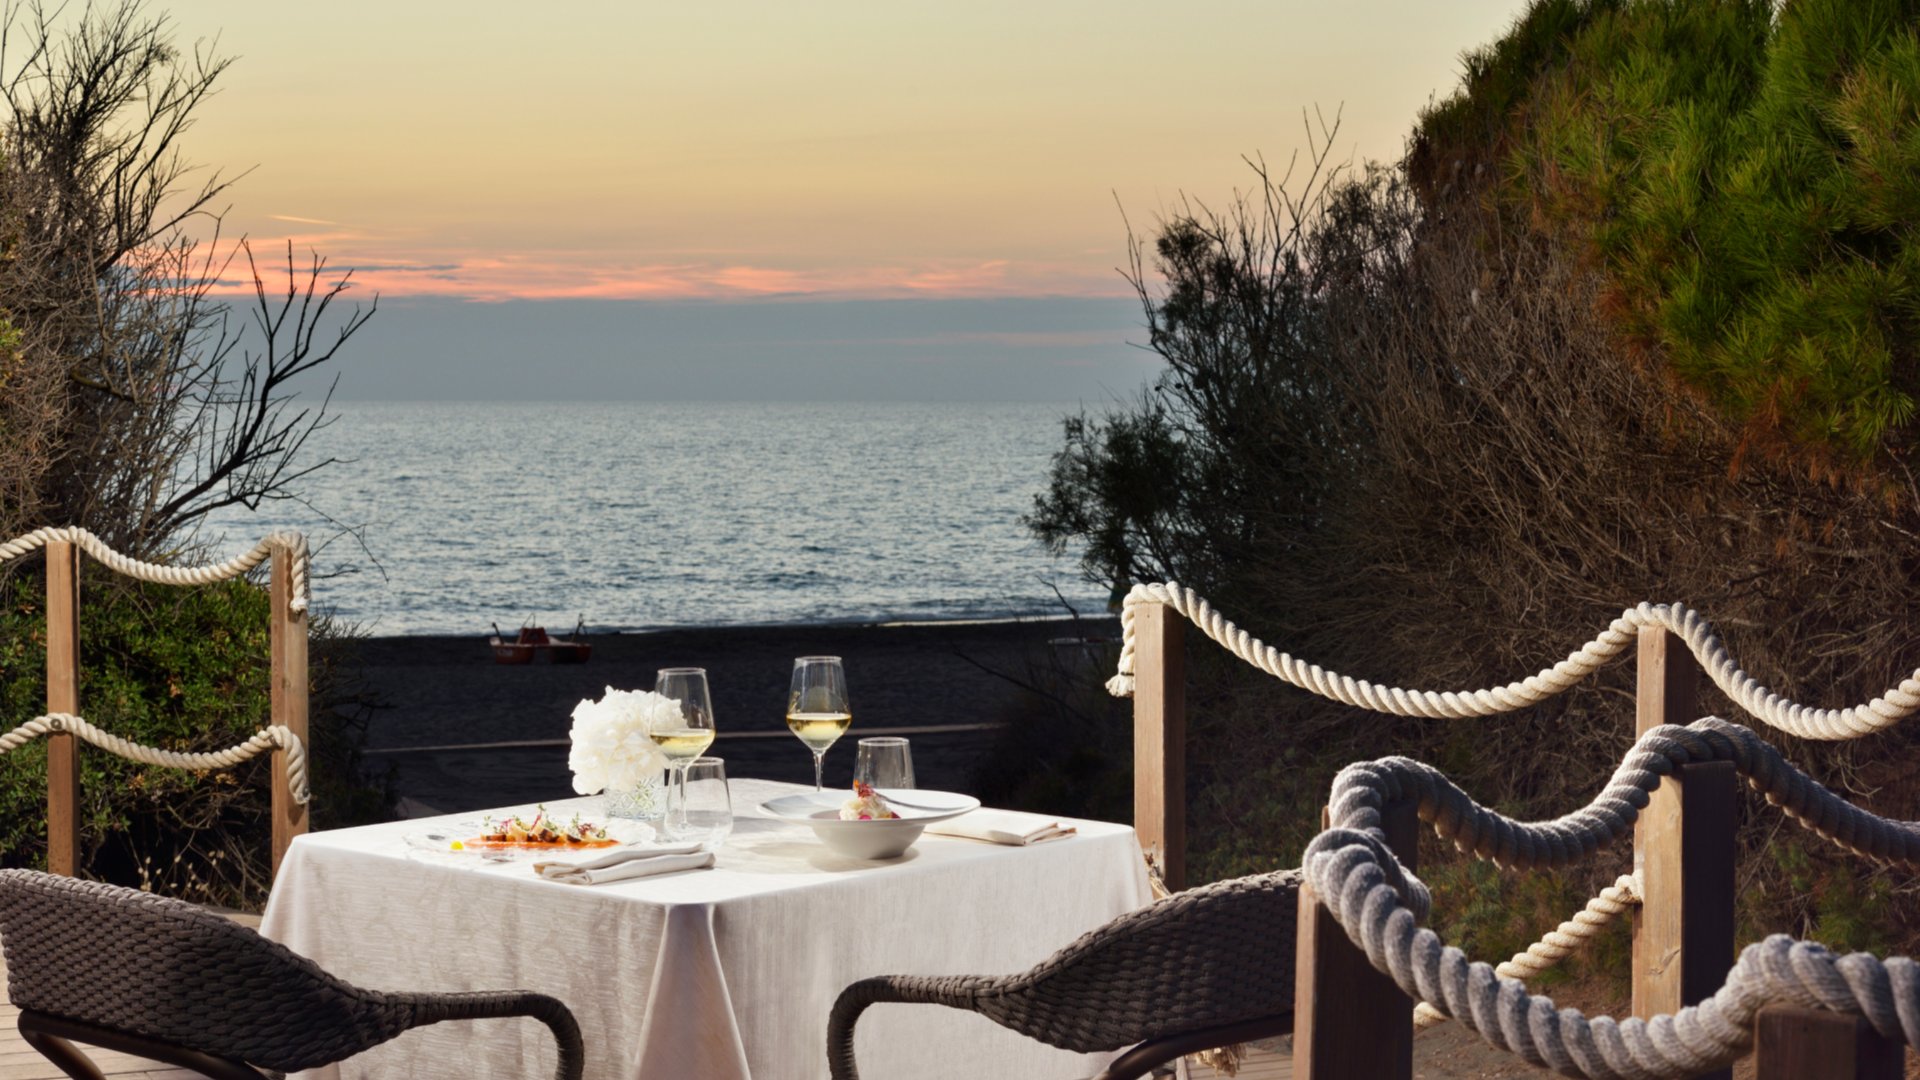 Romantic holiday on the Tuscan coast at Marina di Bibbona